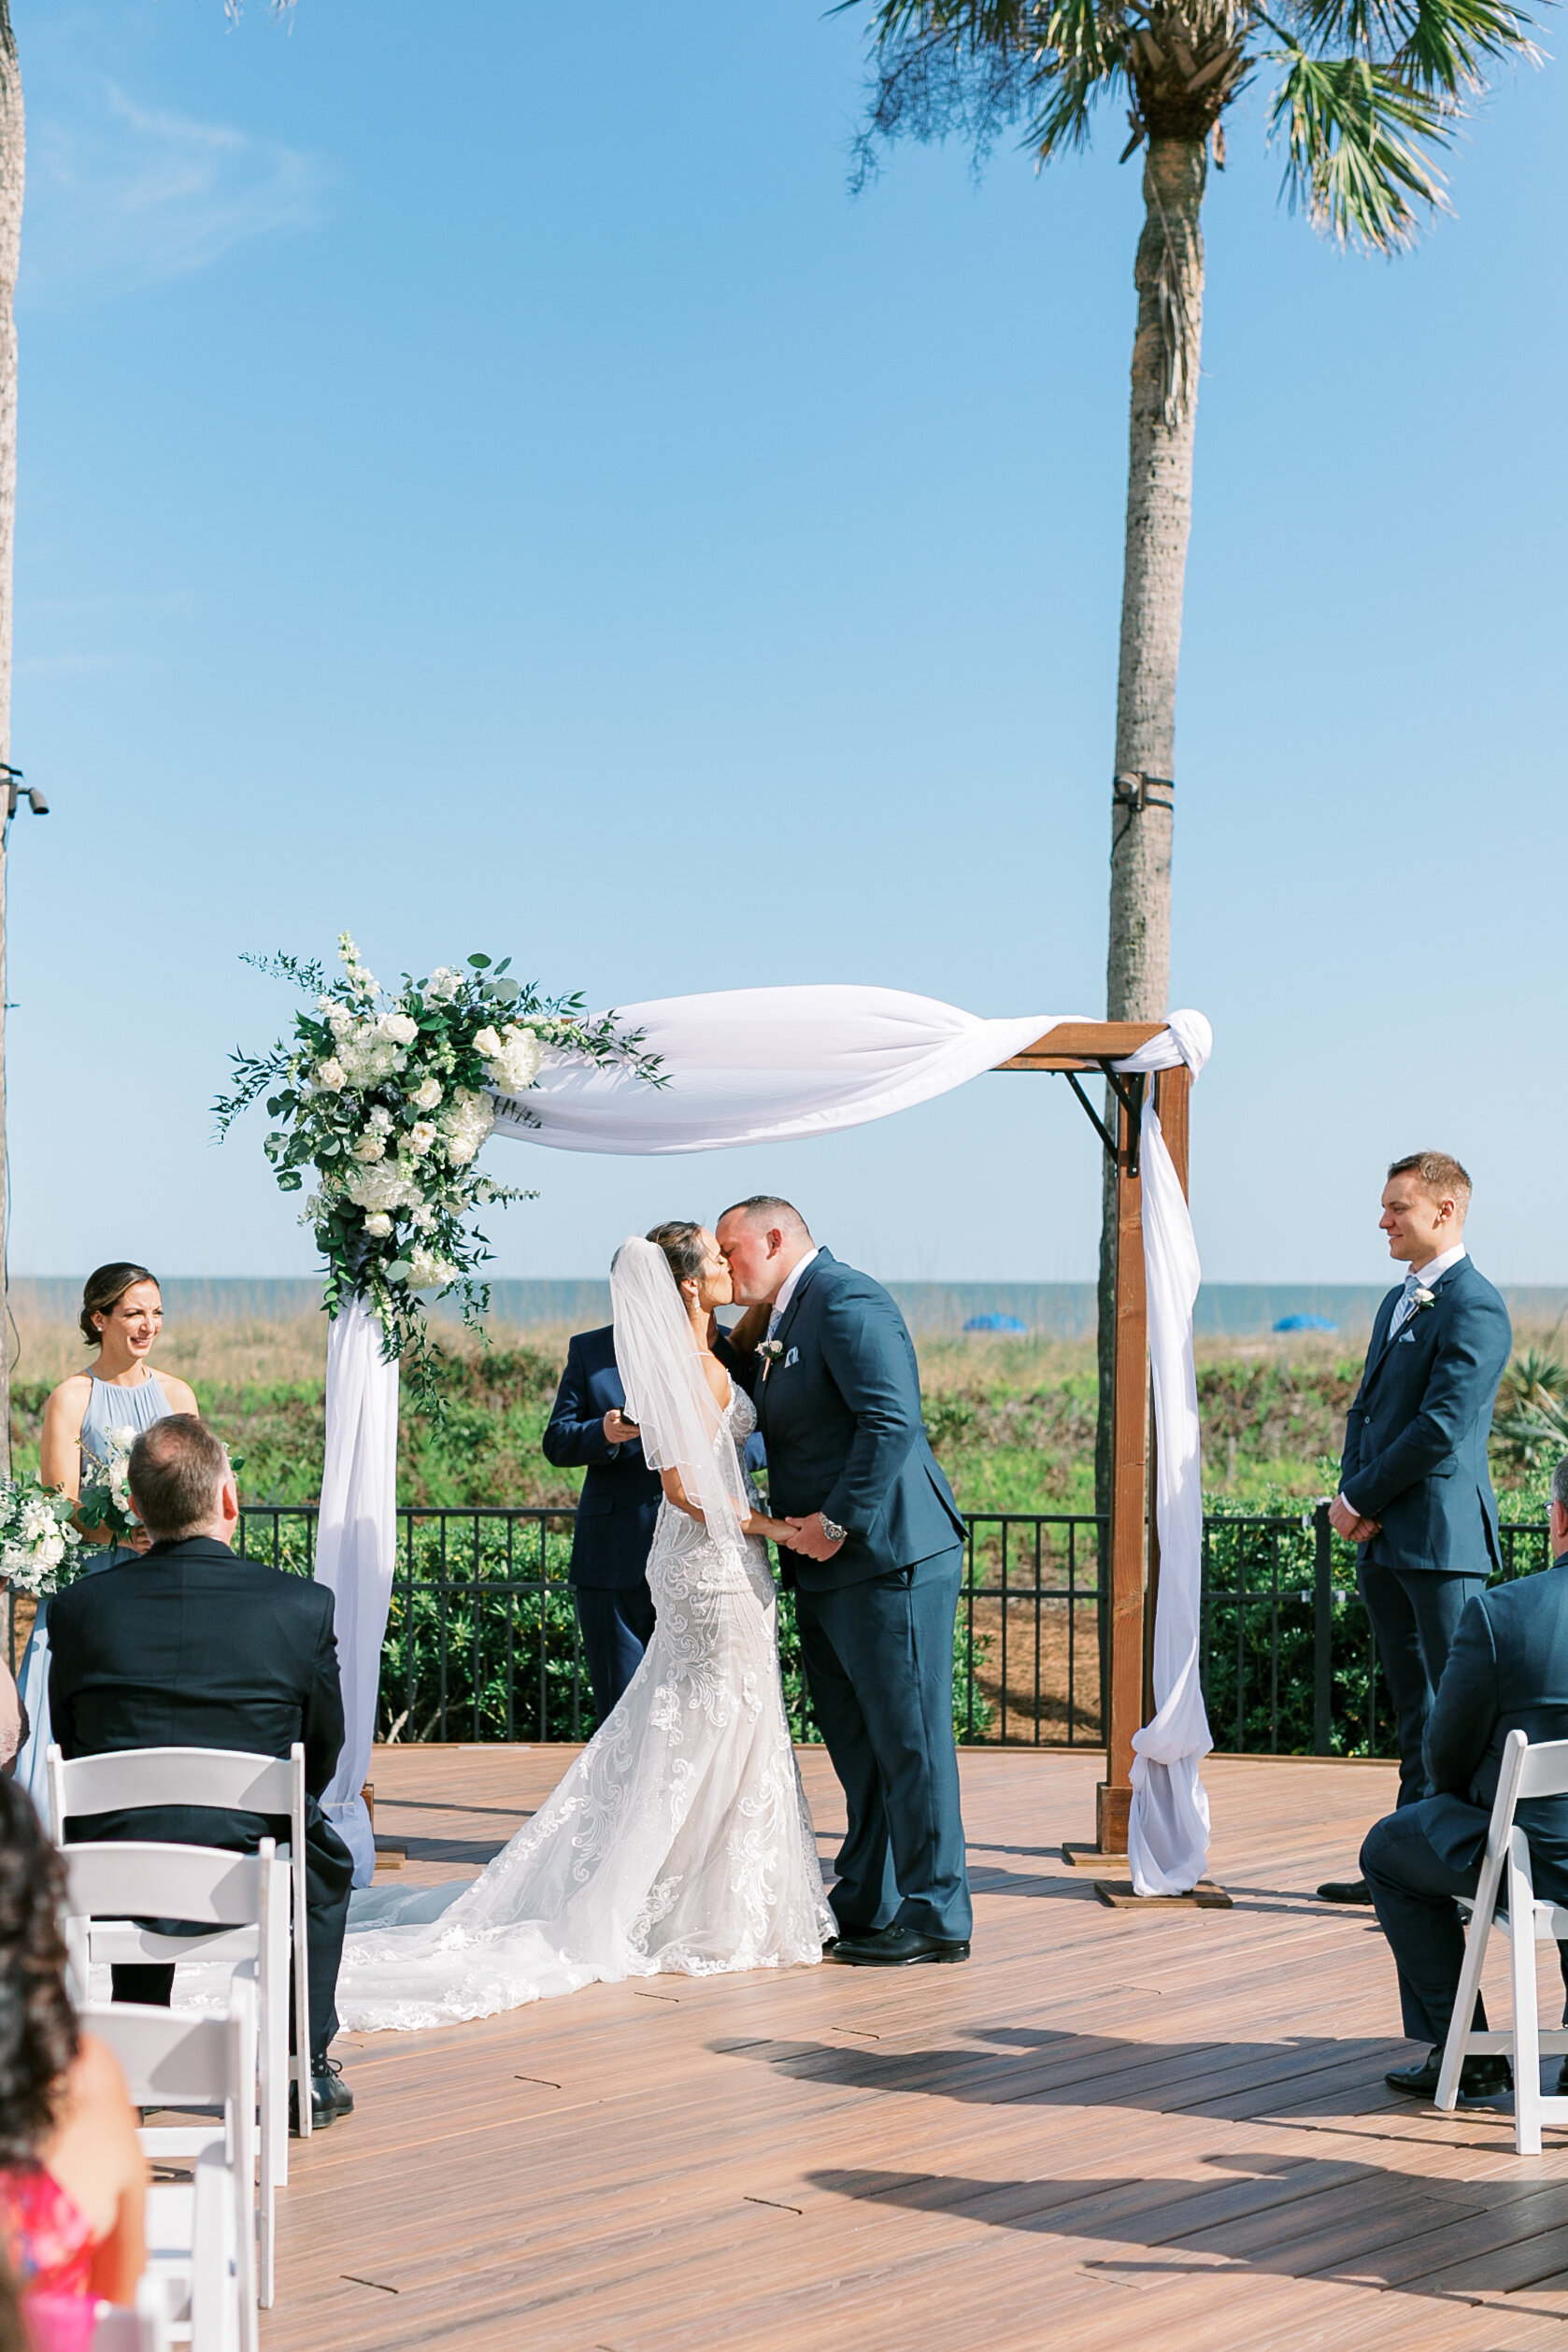 Joyful happy first kiss of bride and groom in Hilton Head Island, South Carolina beachside wedding.